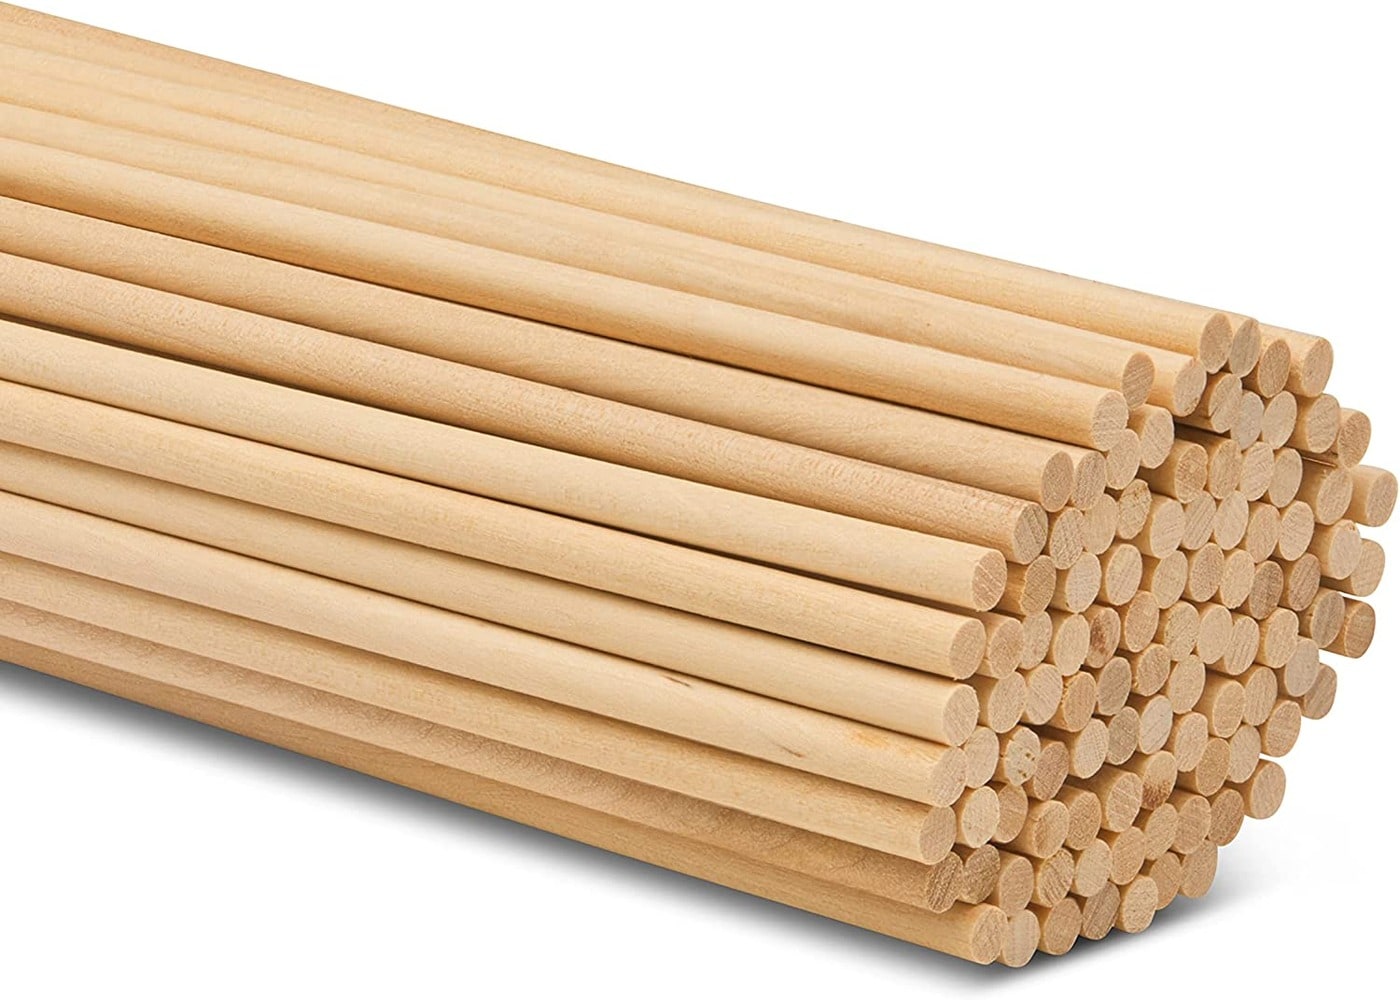 25/50 PCS Dowel Rods Wood Sticks Wooden Dowel Rods ,Natural Wood